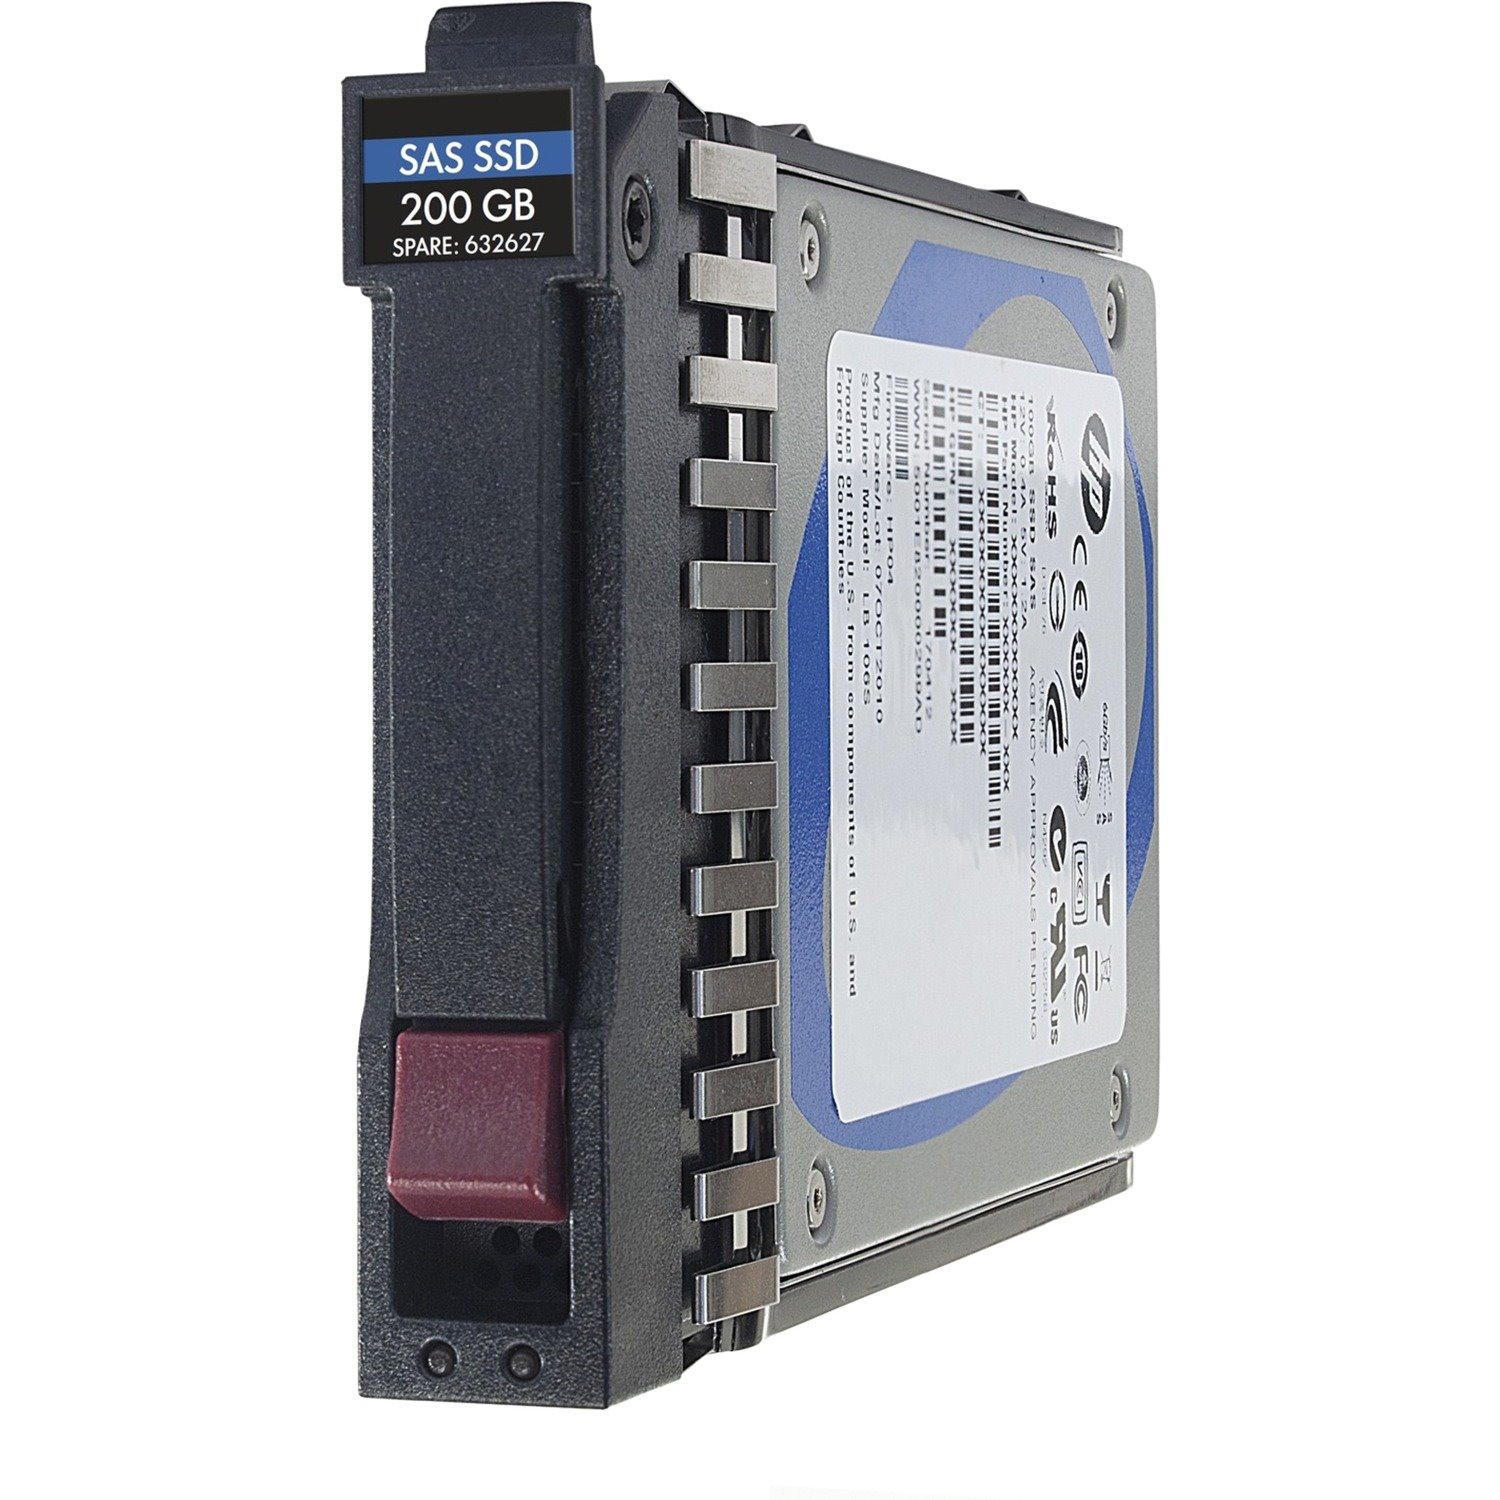 HPE 1.20 TB Hard Drive - 2.5" Internal - SAS (12Gb/s SAS)